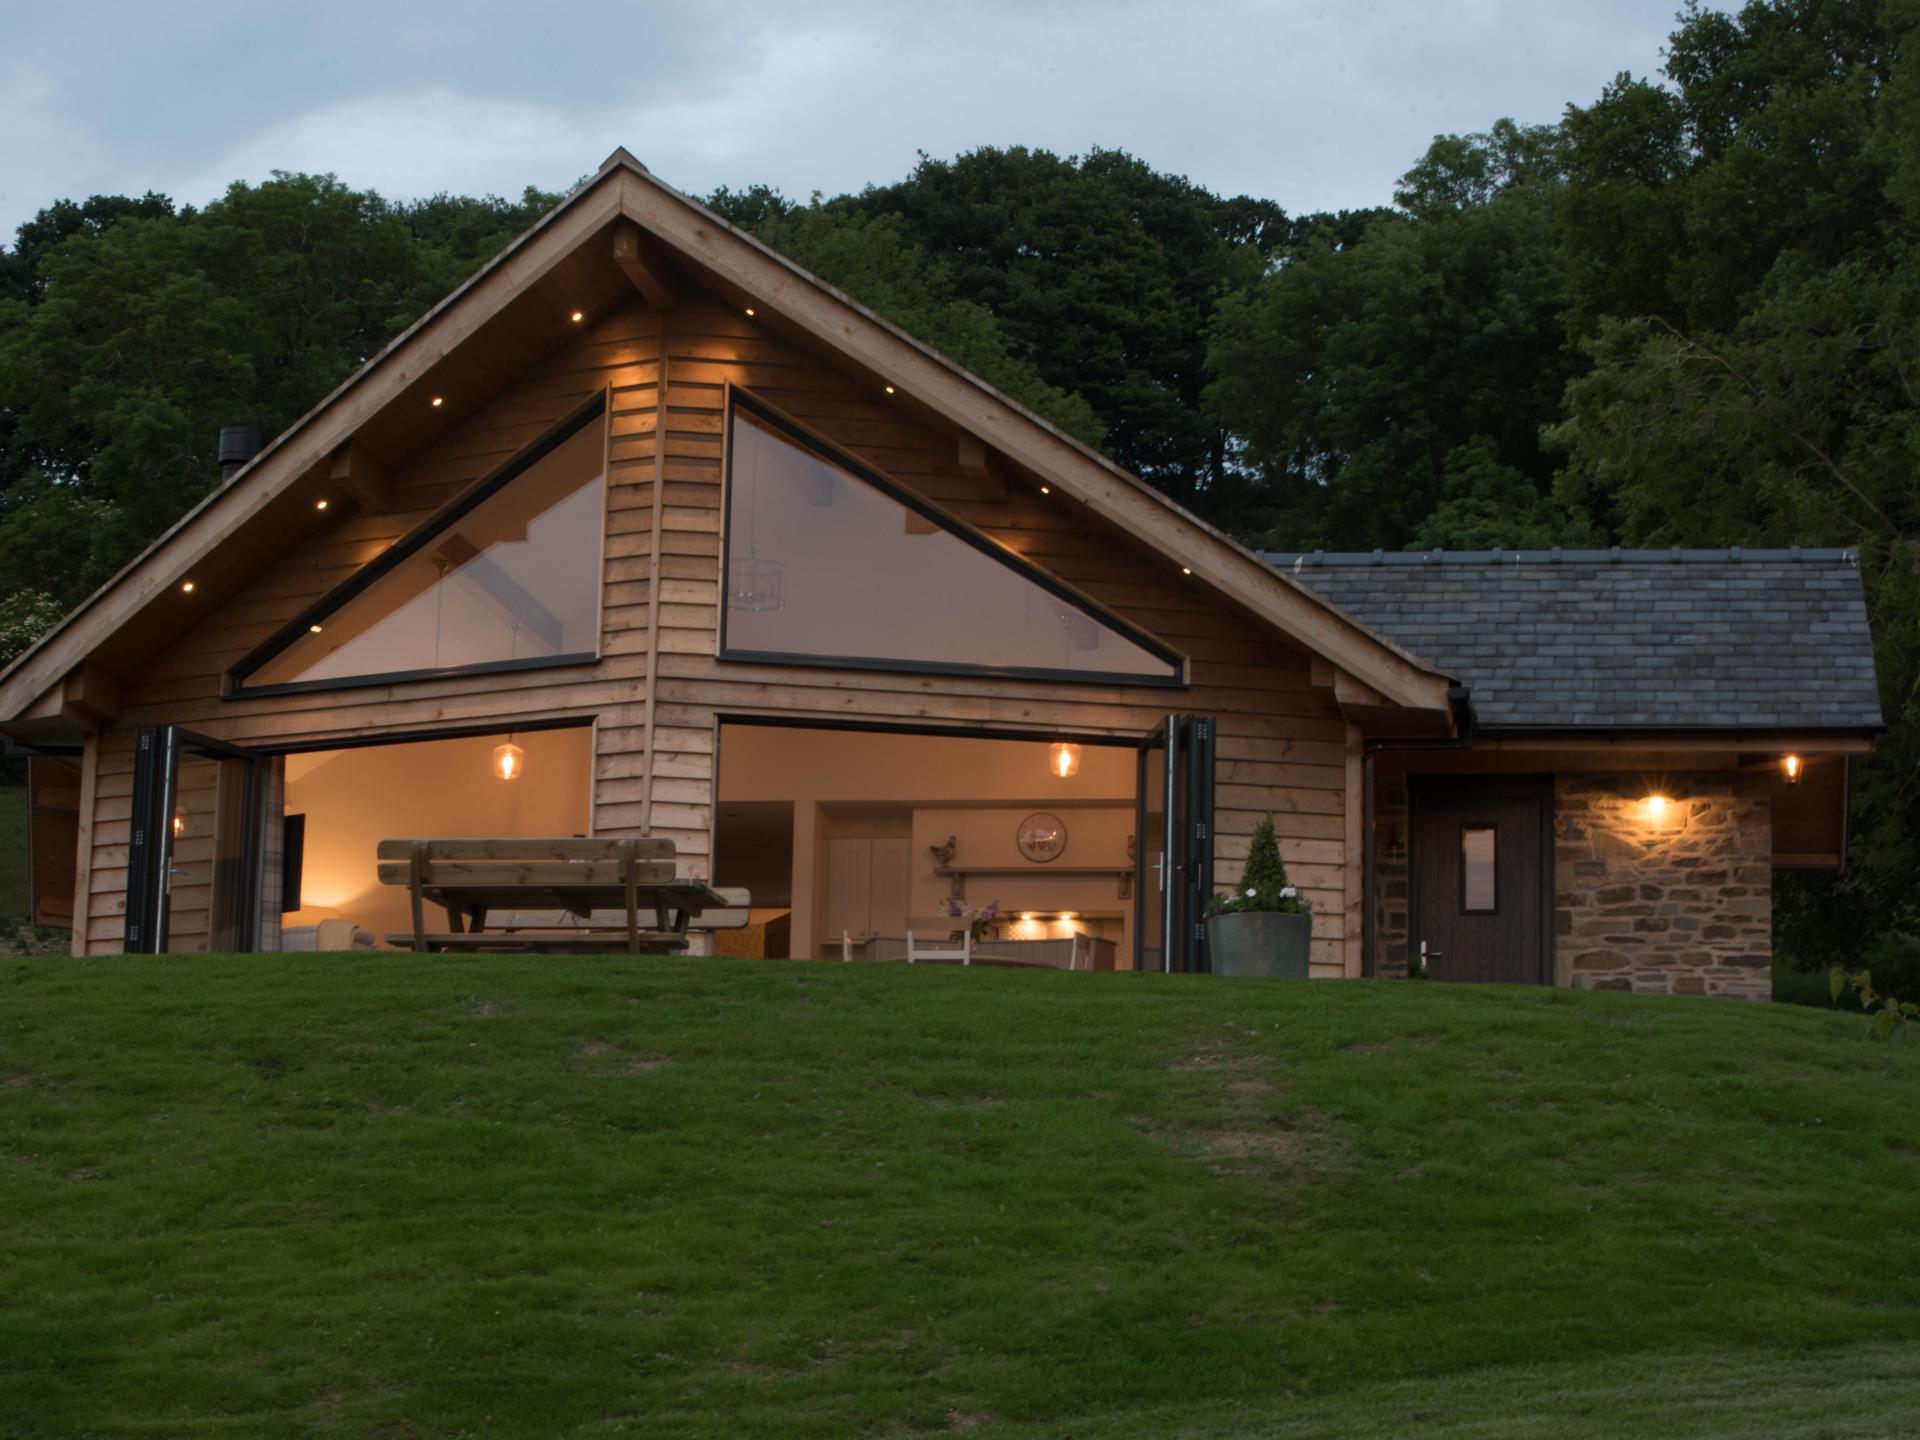 Stunning, bespoke designed Lodge